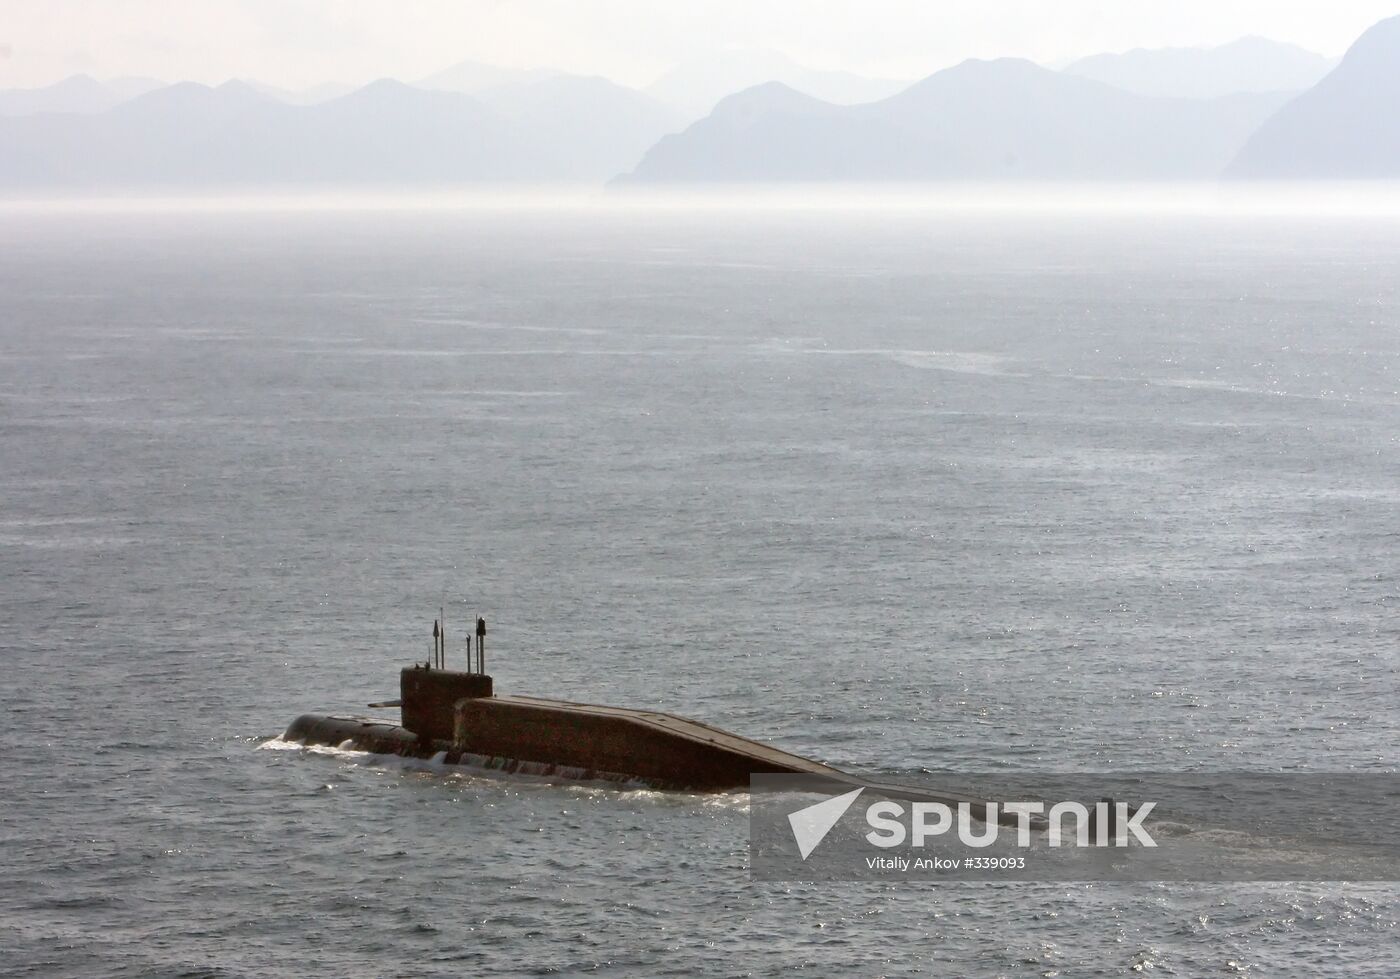 Russia's Pacific Ocean Fleet planned maneuvers in Kamchatka area